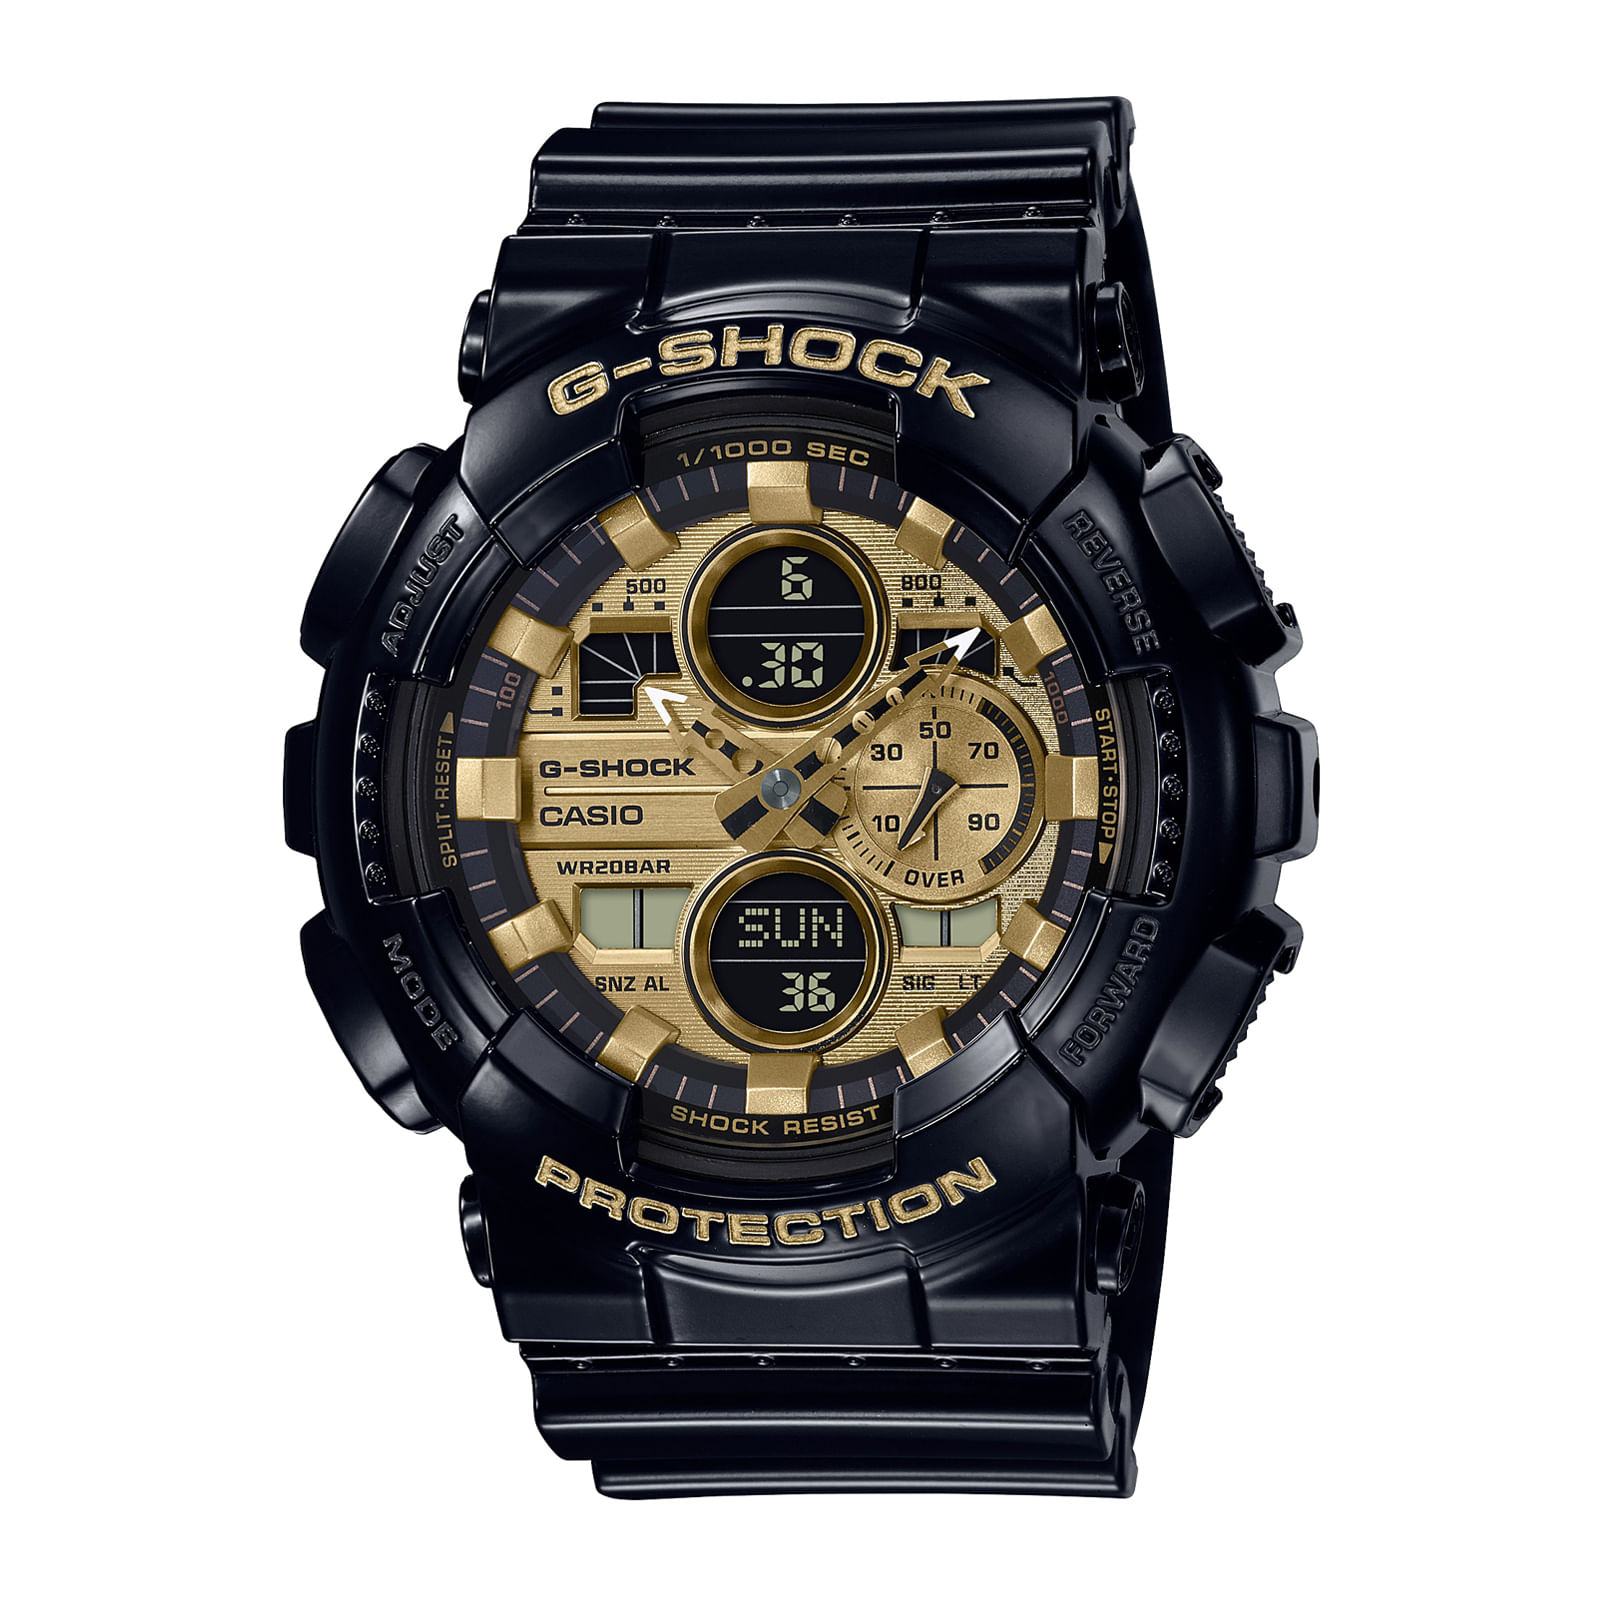 Reloj G-SHOCK GA-140GB-1A1 Resina Hombre Negro